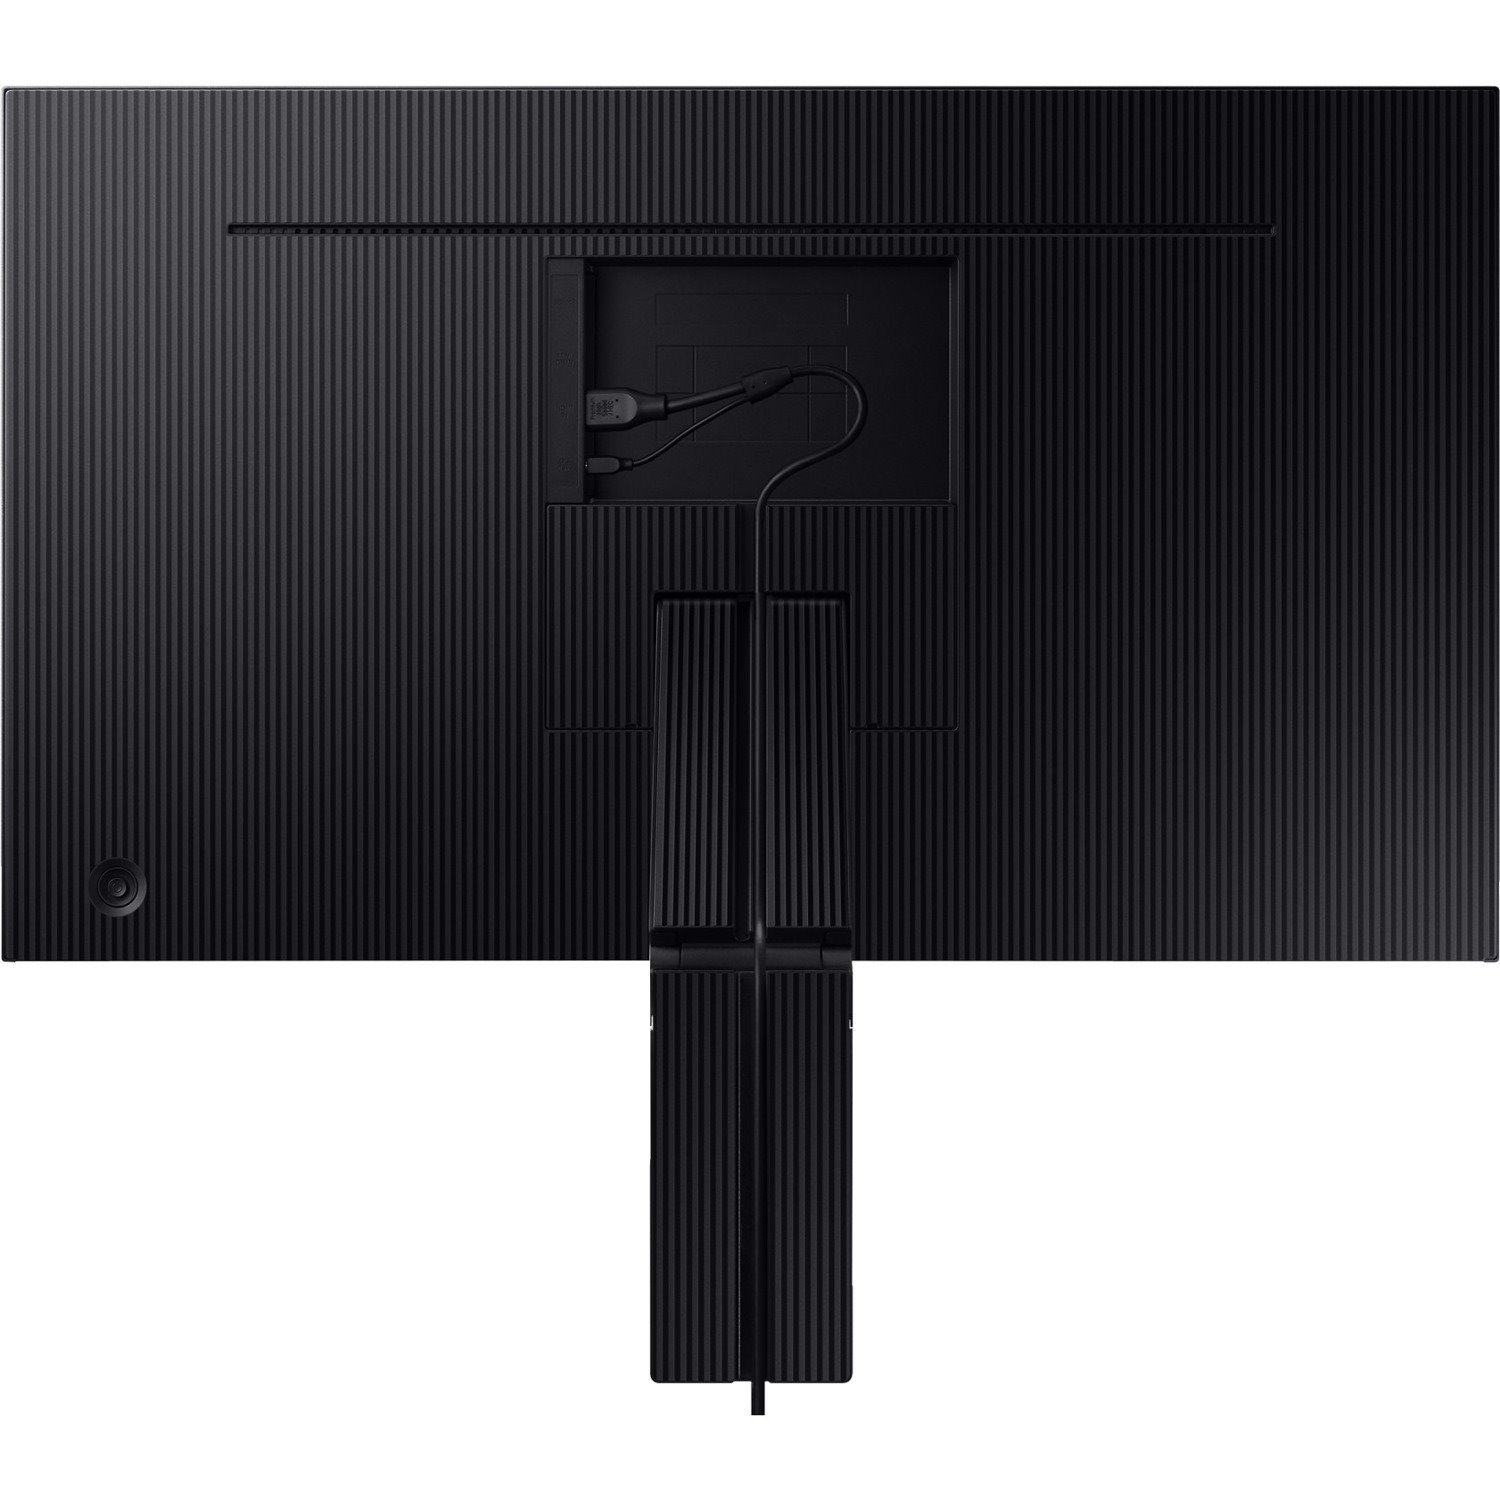 Samsung Space S32R750QEN 32" Class WQHD Gaming LCD Monitor - 16:9 - Black